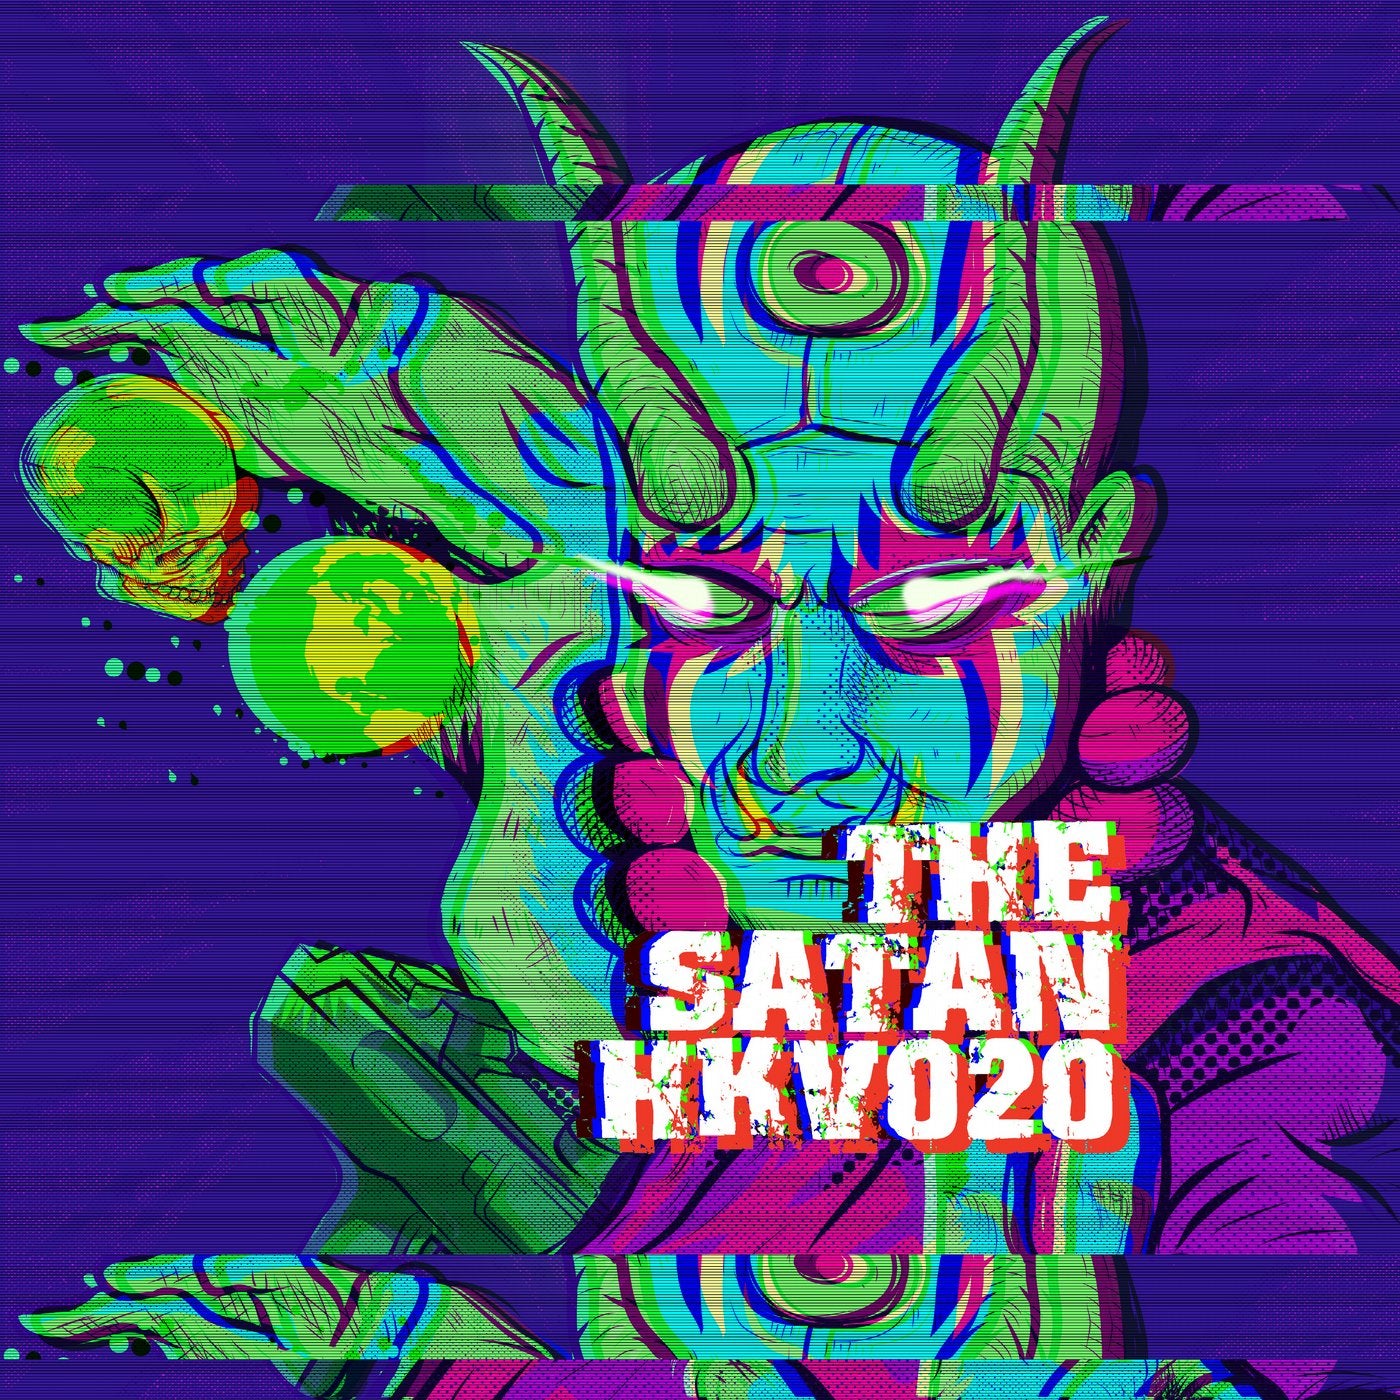 The Satan HKV020